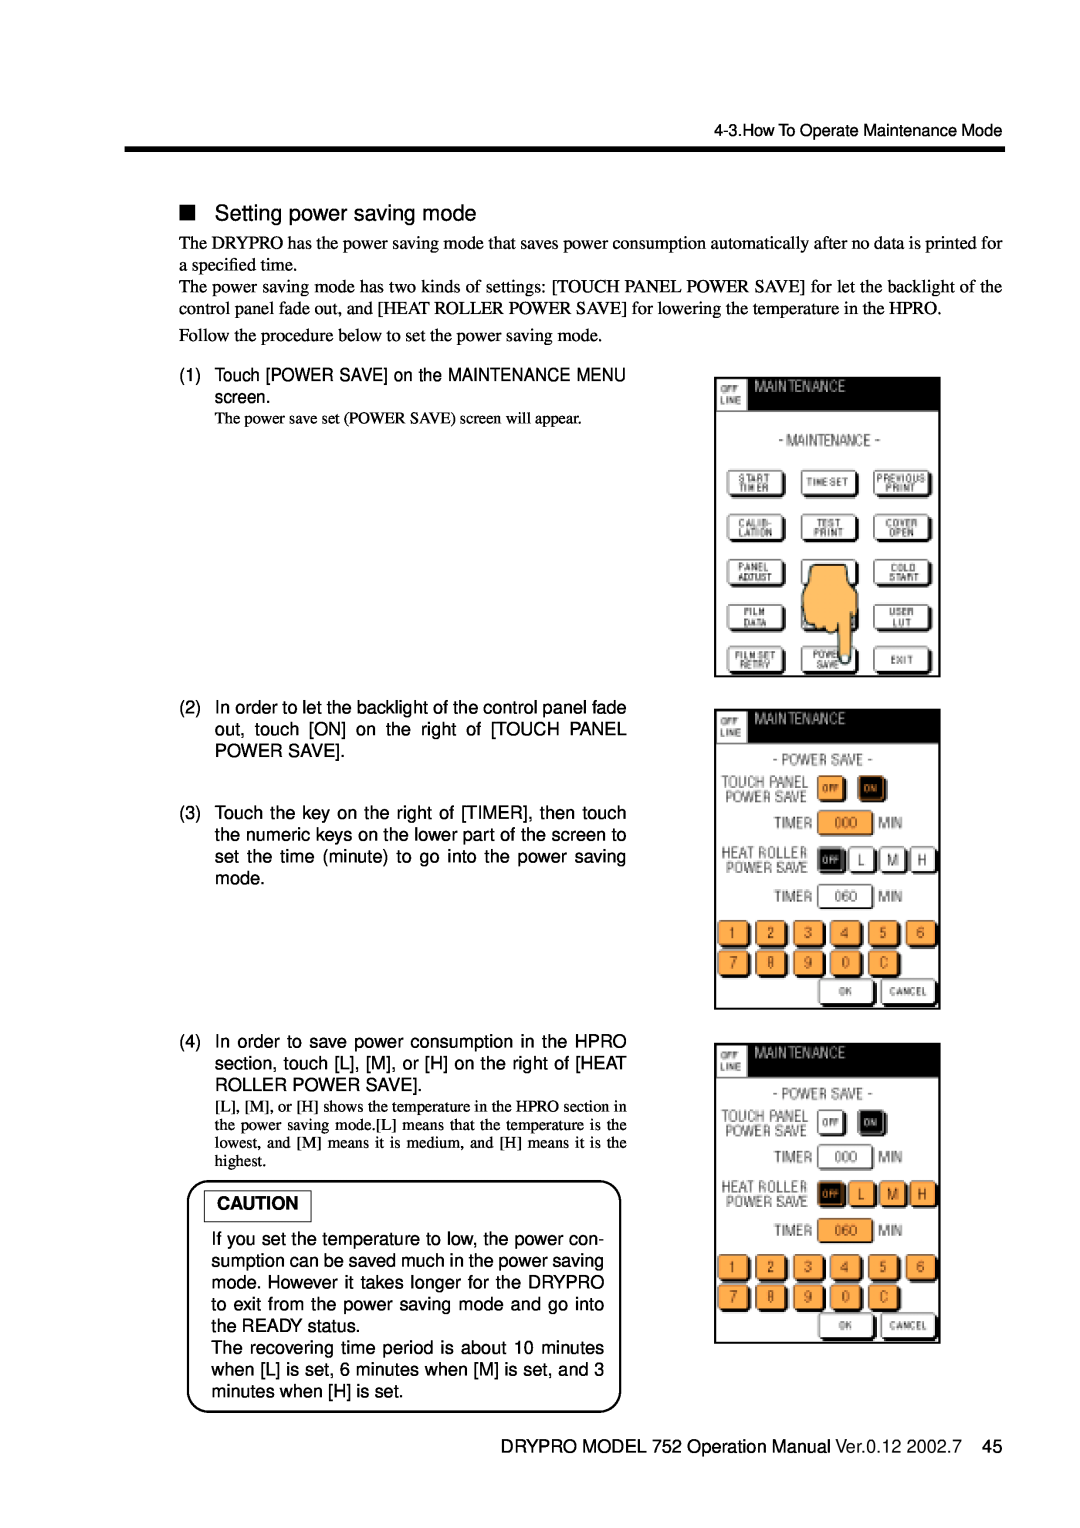 Konica Minolta 752 operation manual Setting power saving mode 